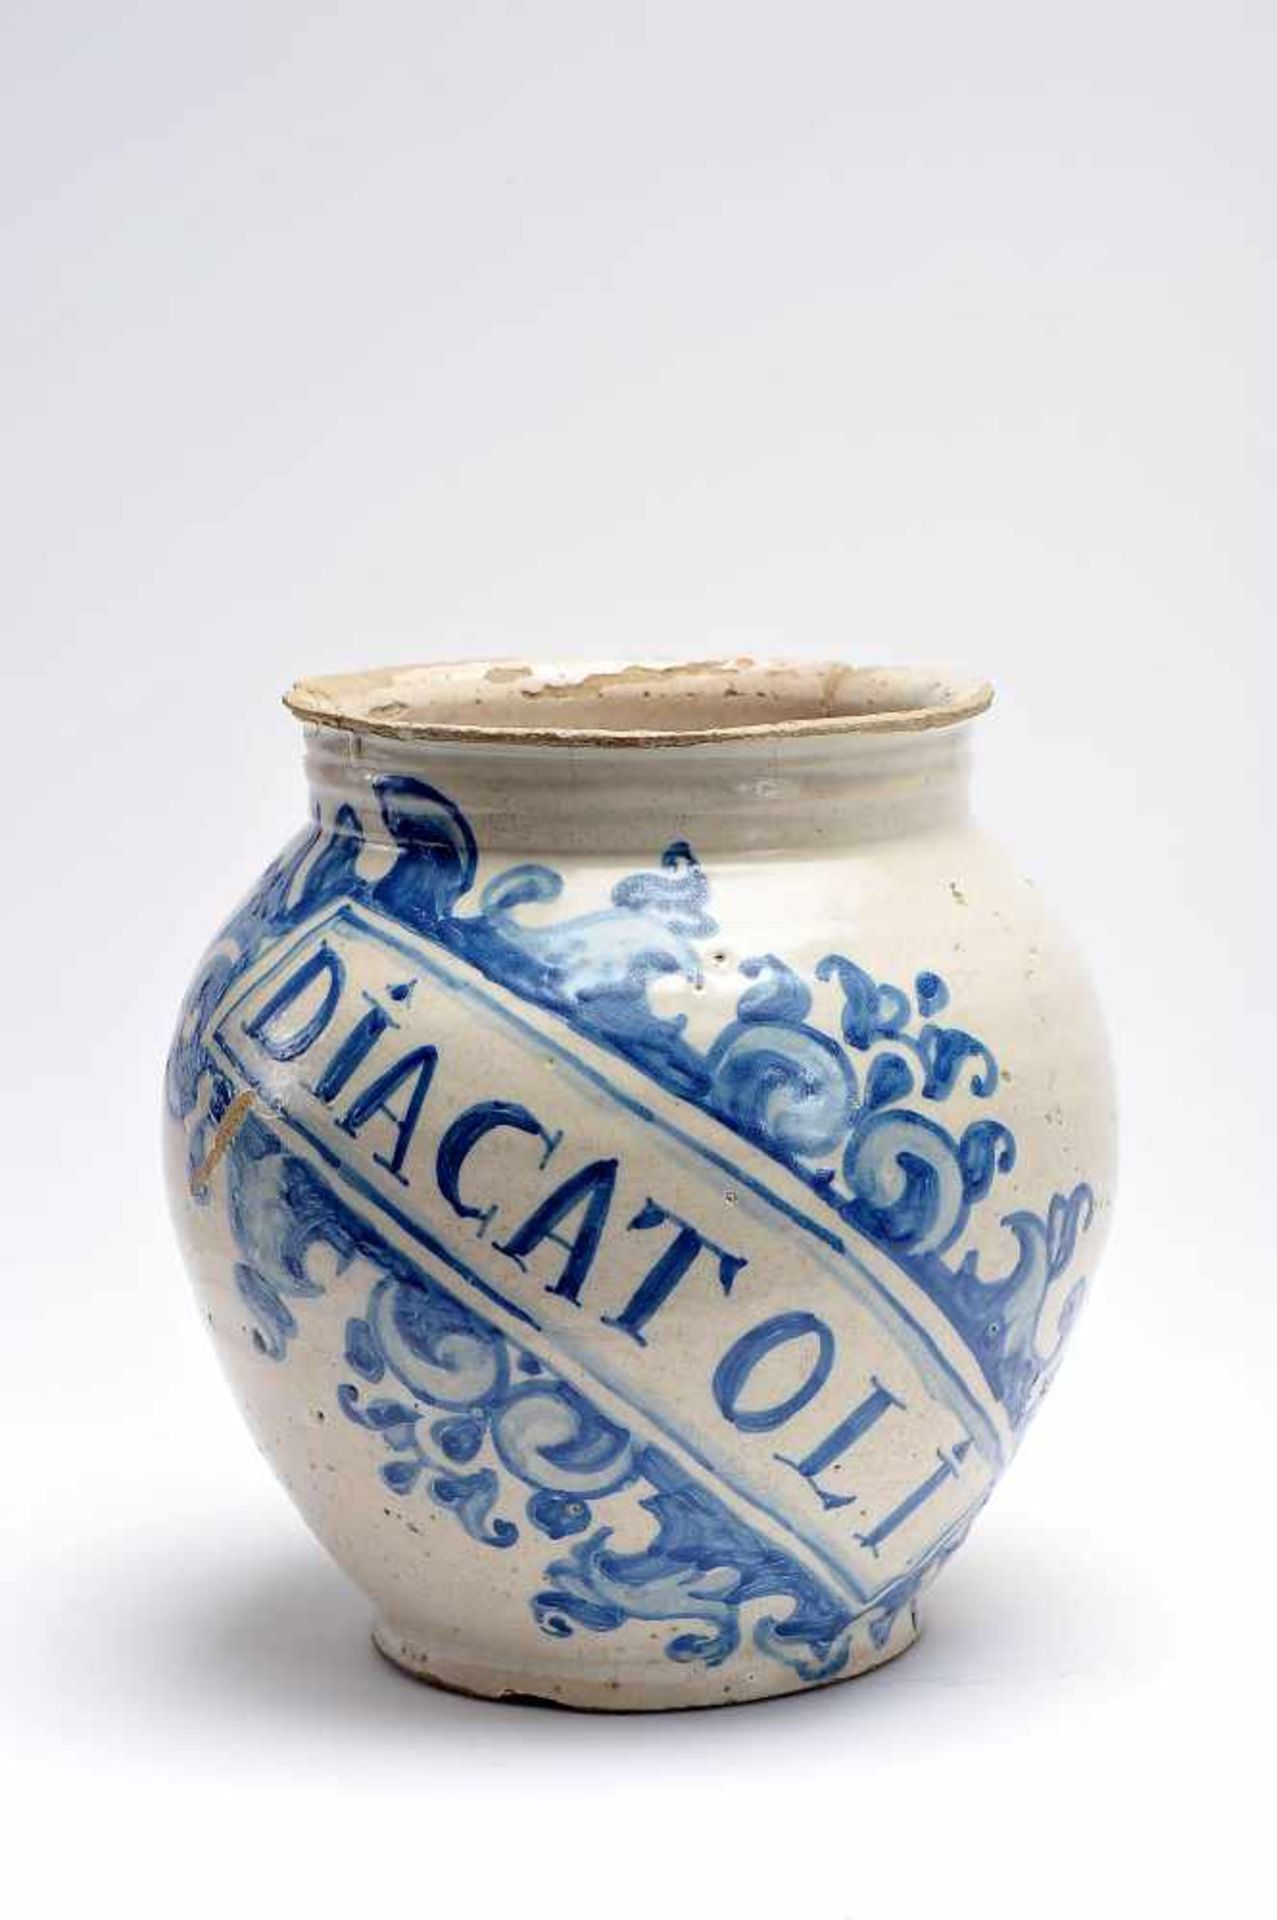 A Pharmacy Pot, faience, blue «Baroque Cartouche» decoration with DIACATOLI inscription, Portuguese,